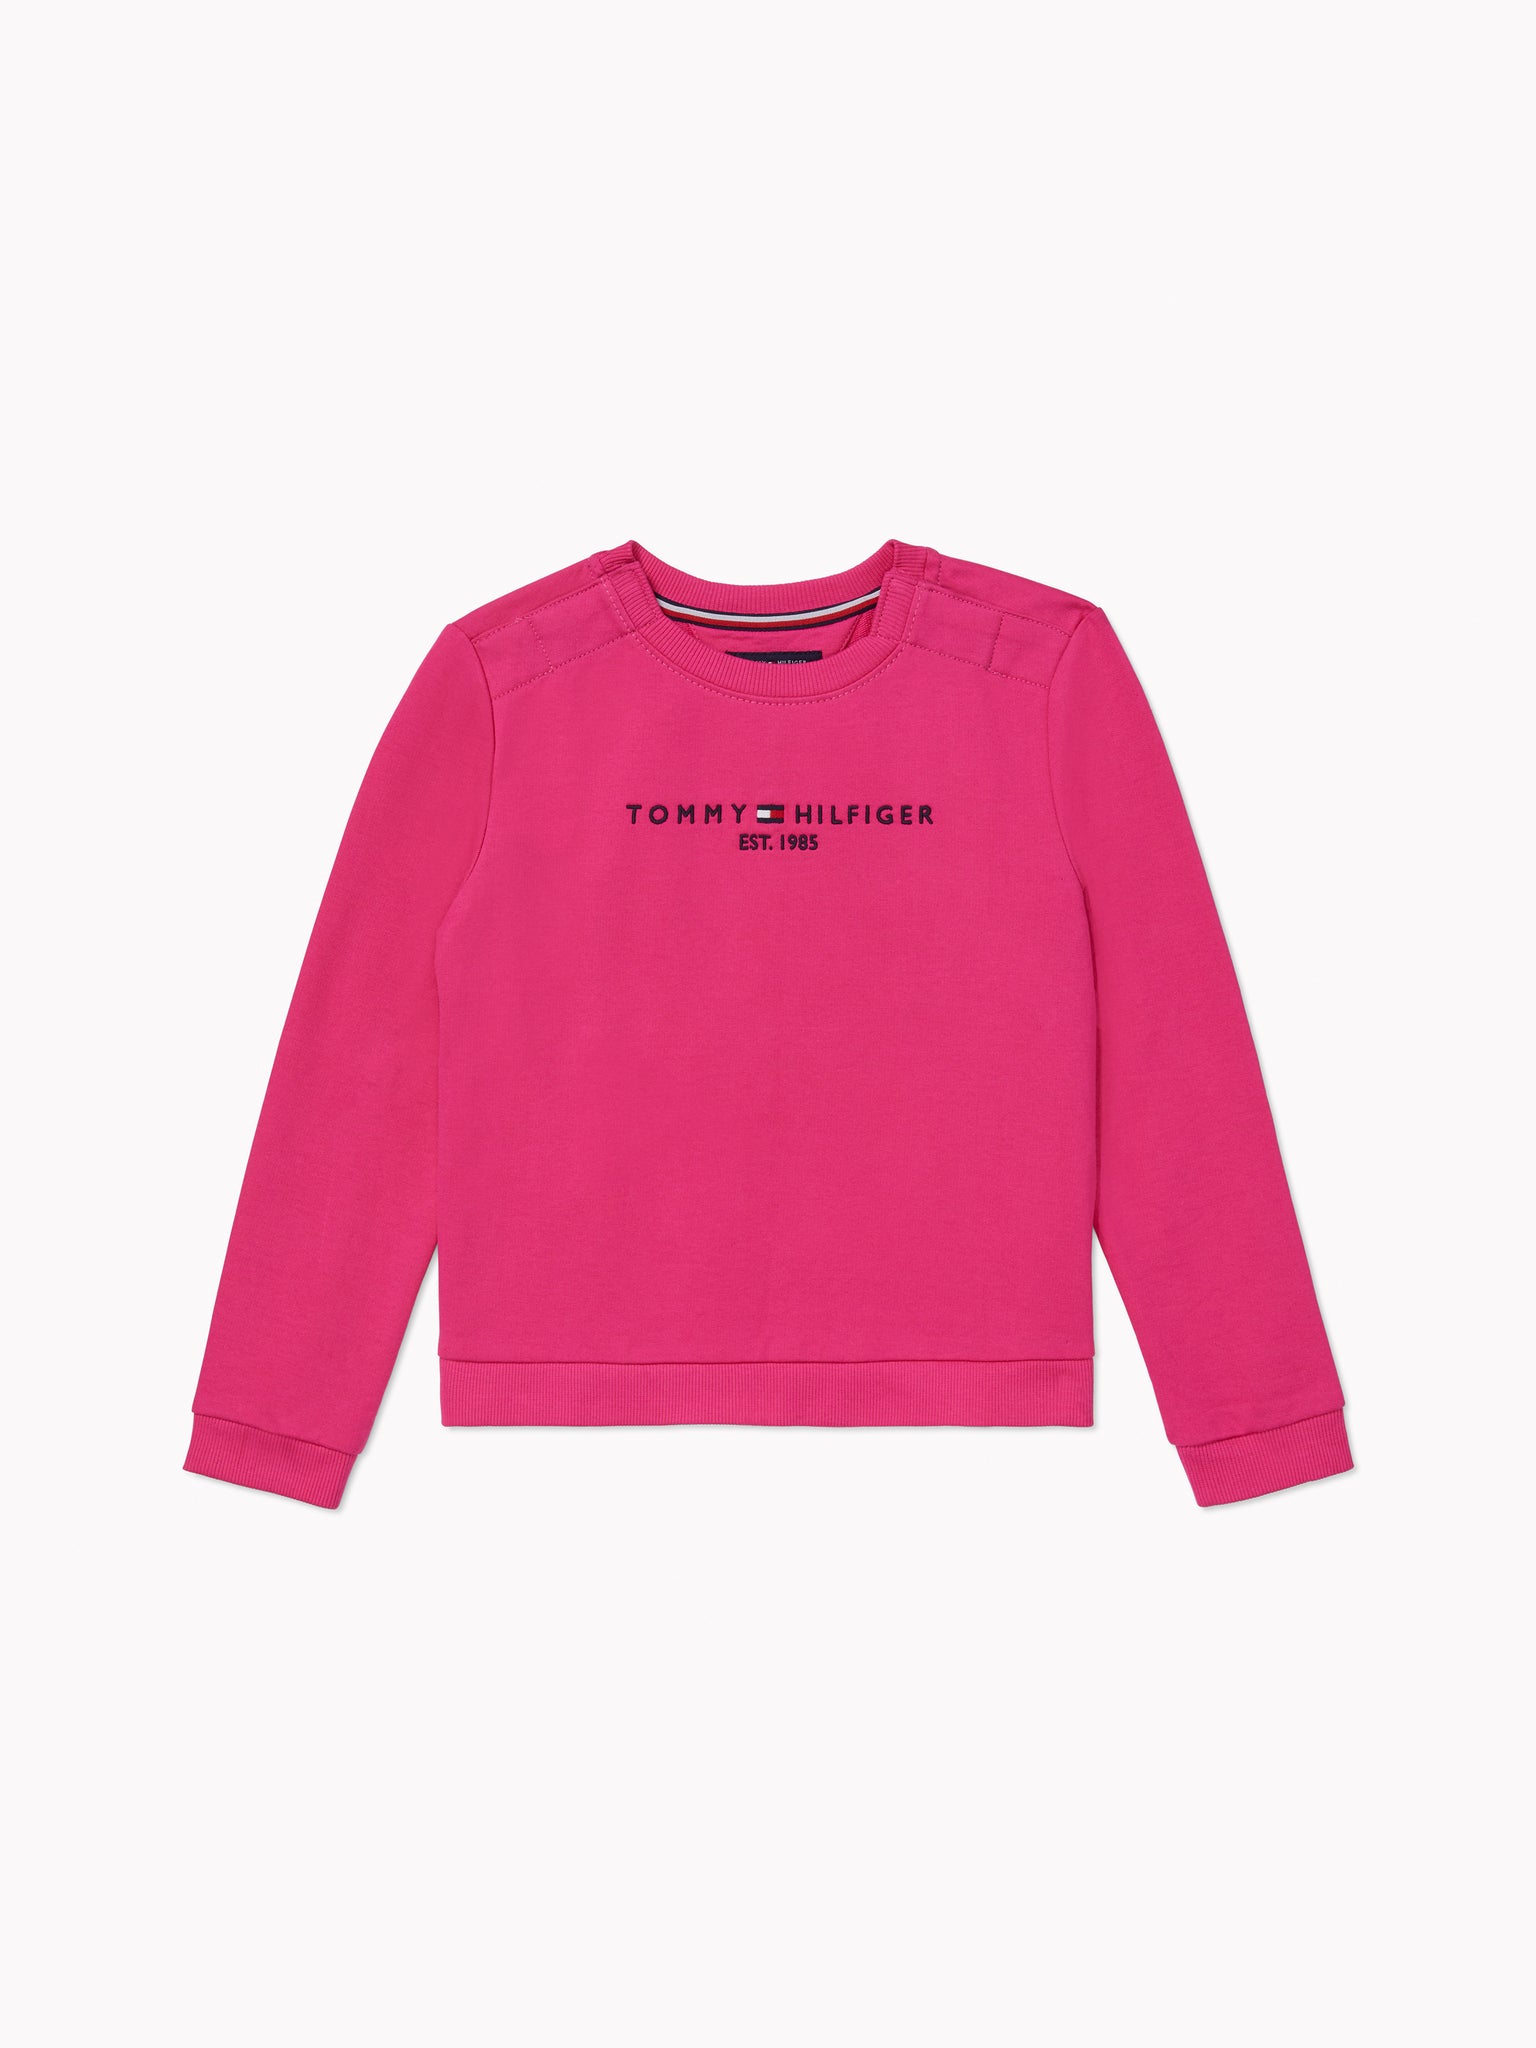 Popover Sweatshirt (Girls) - Pink